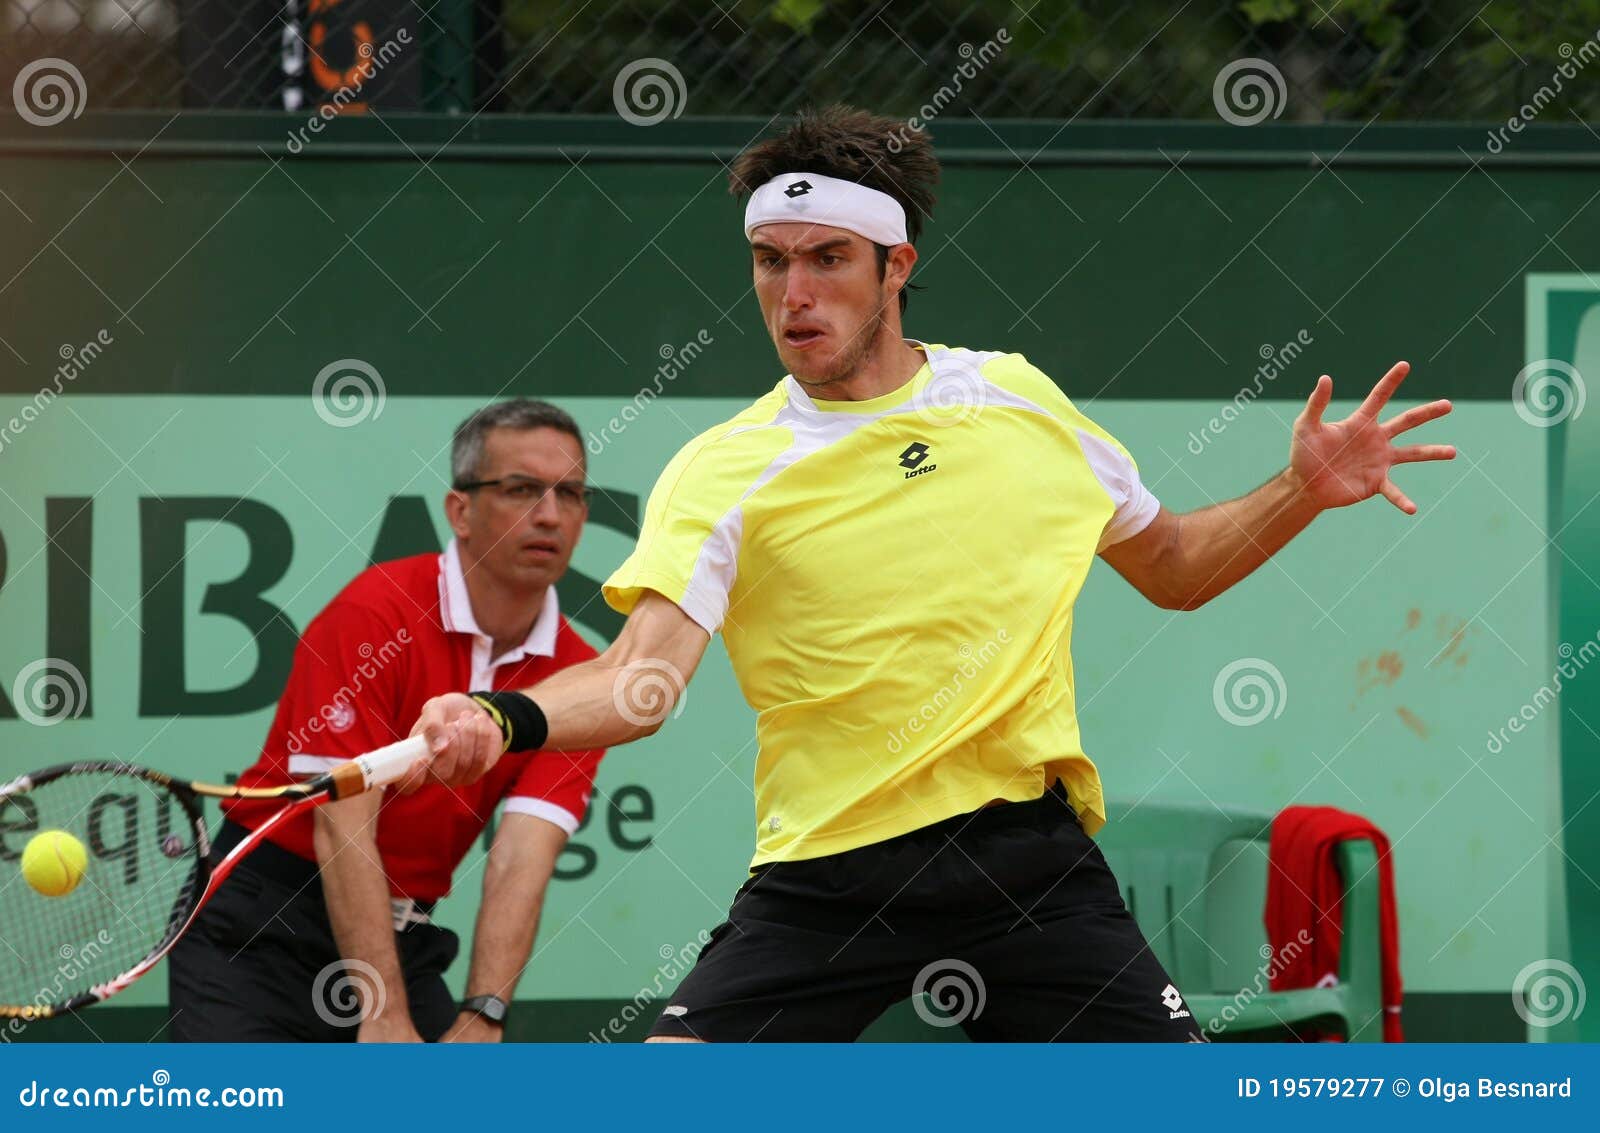 Leonardo Mayer (ARG) at Roland Garros 2011 Editorial Photography ...